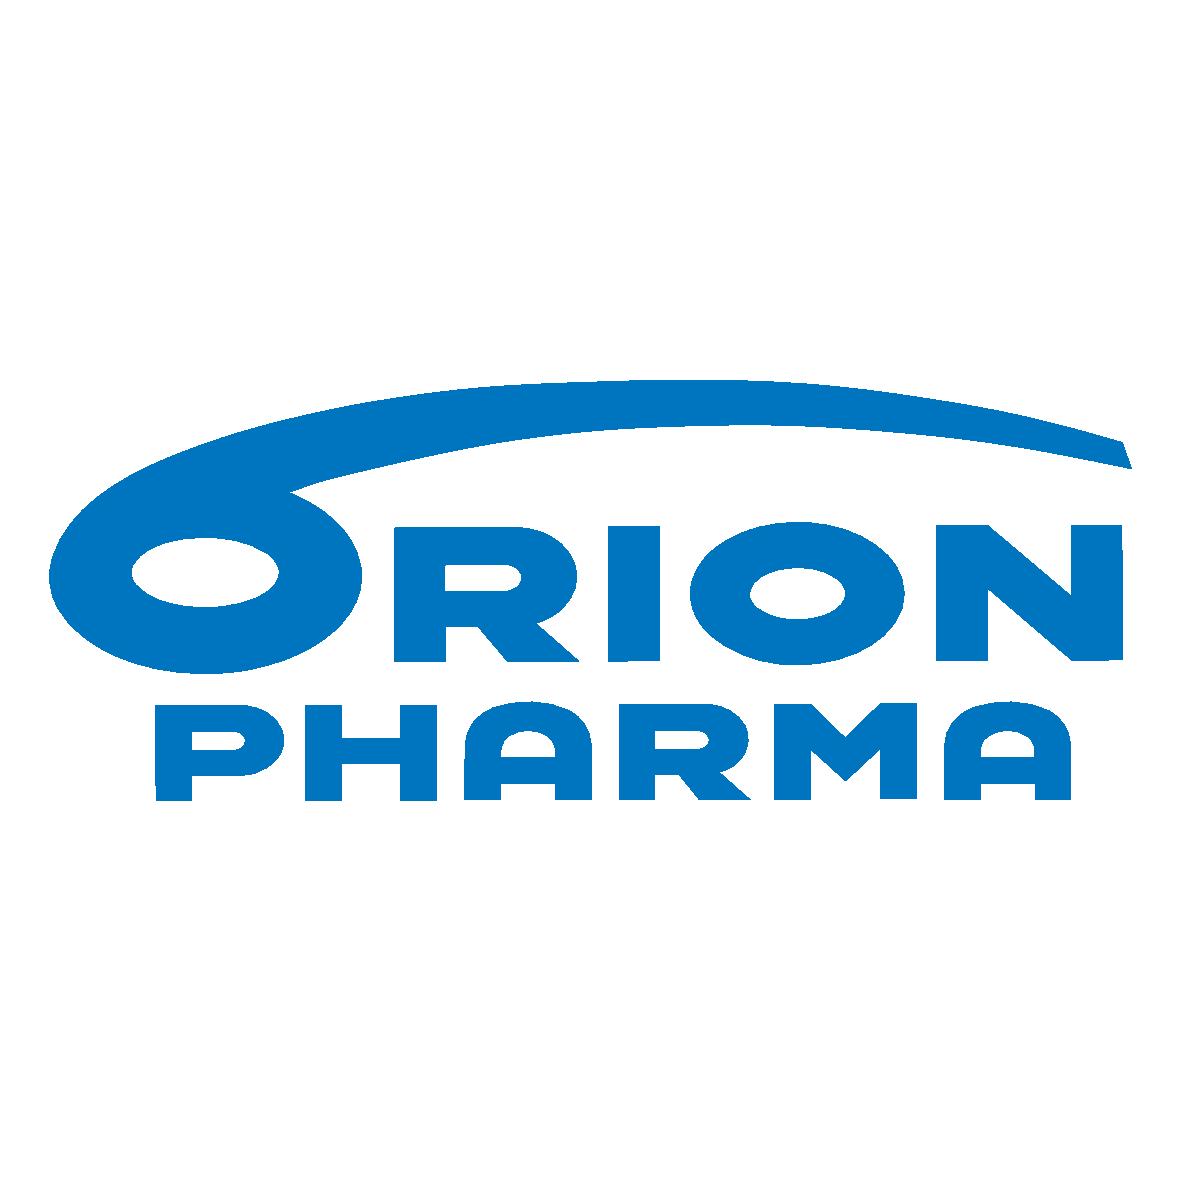 orion pharma 35975 page 001